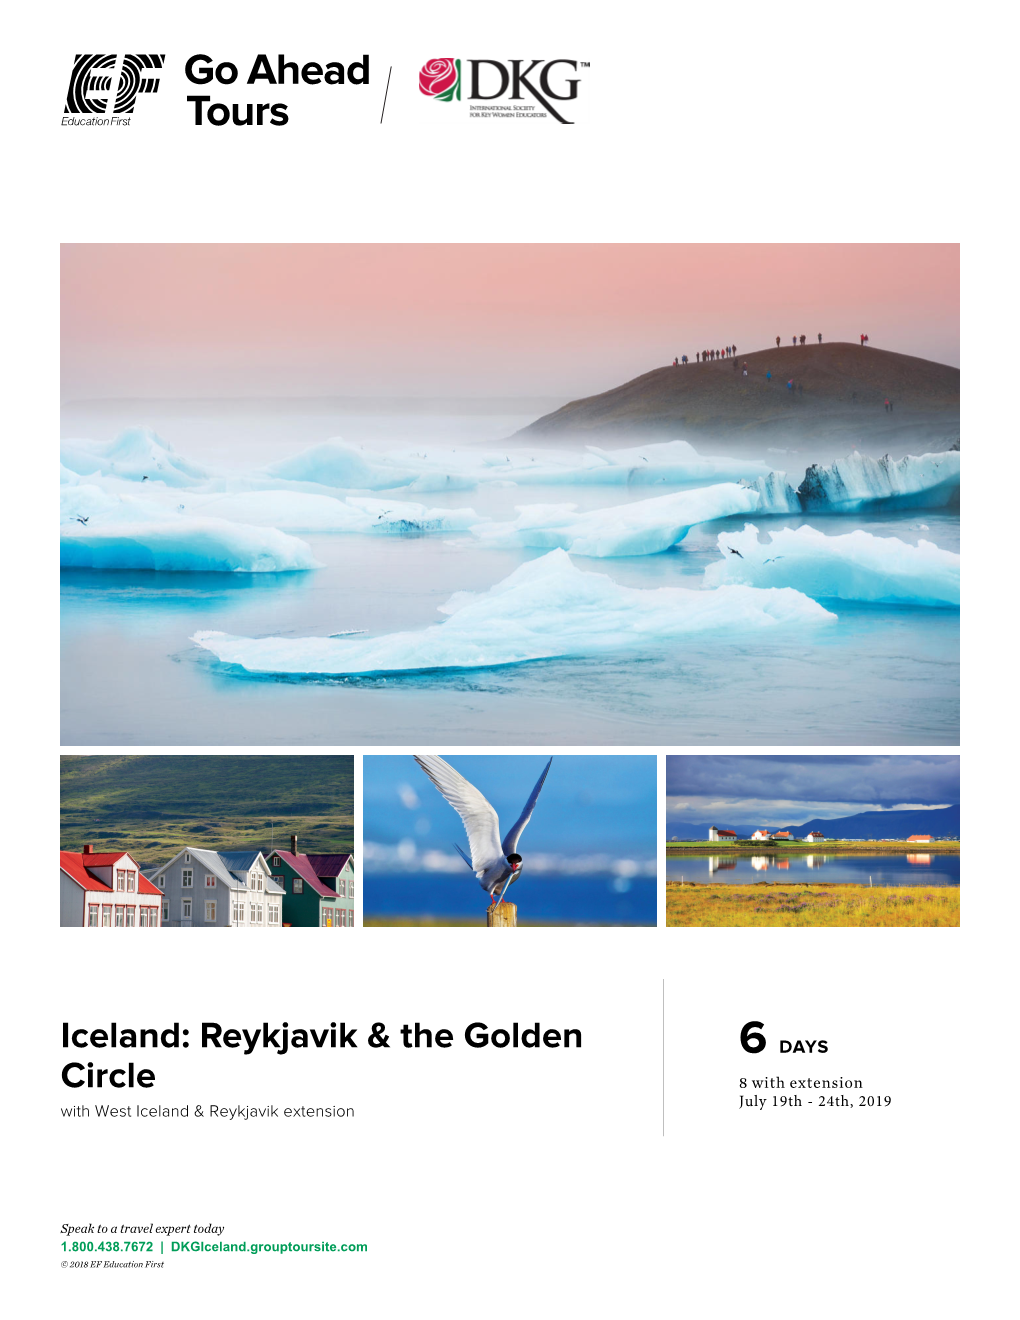 Iceland: Reykjavik & the Golden Circle